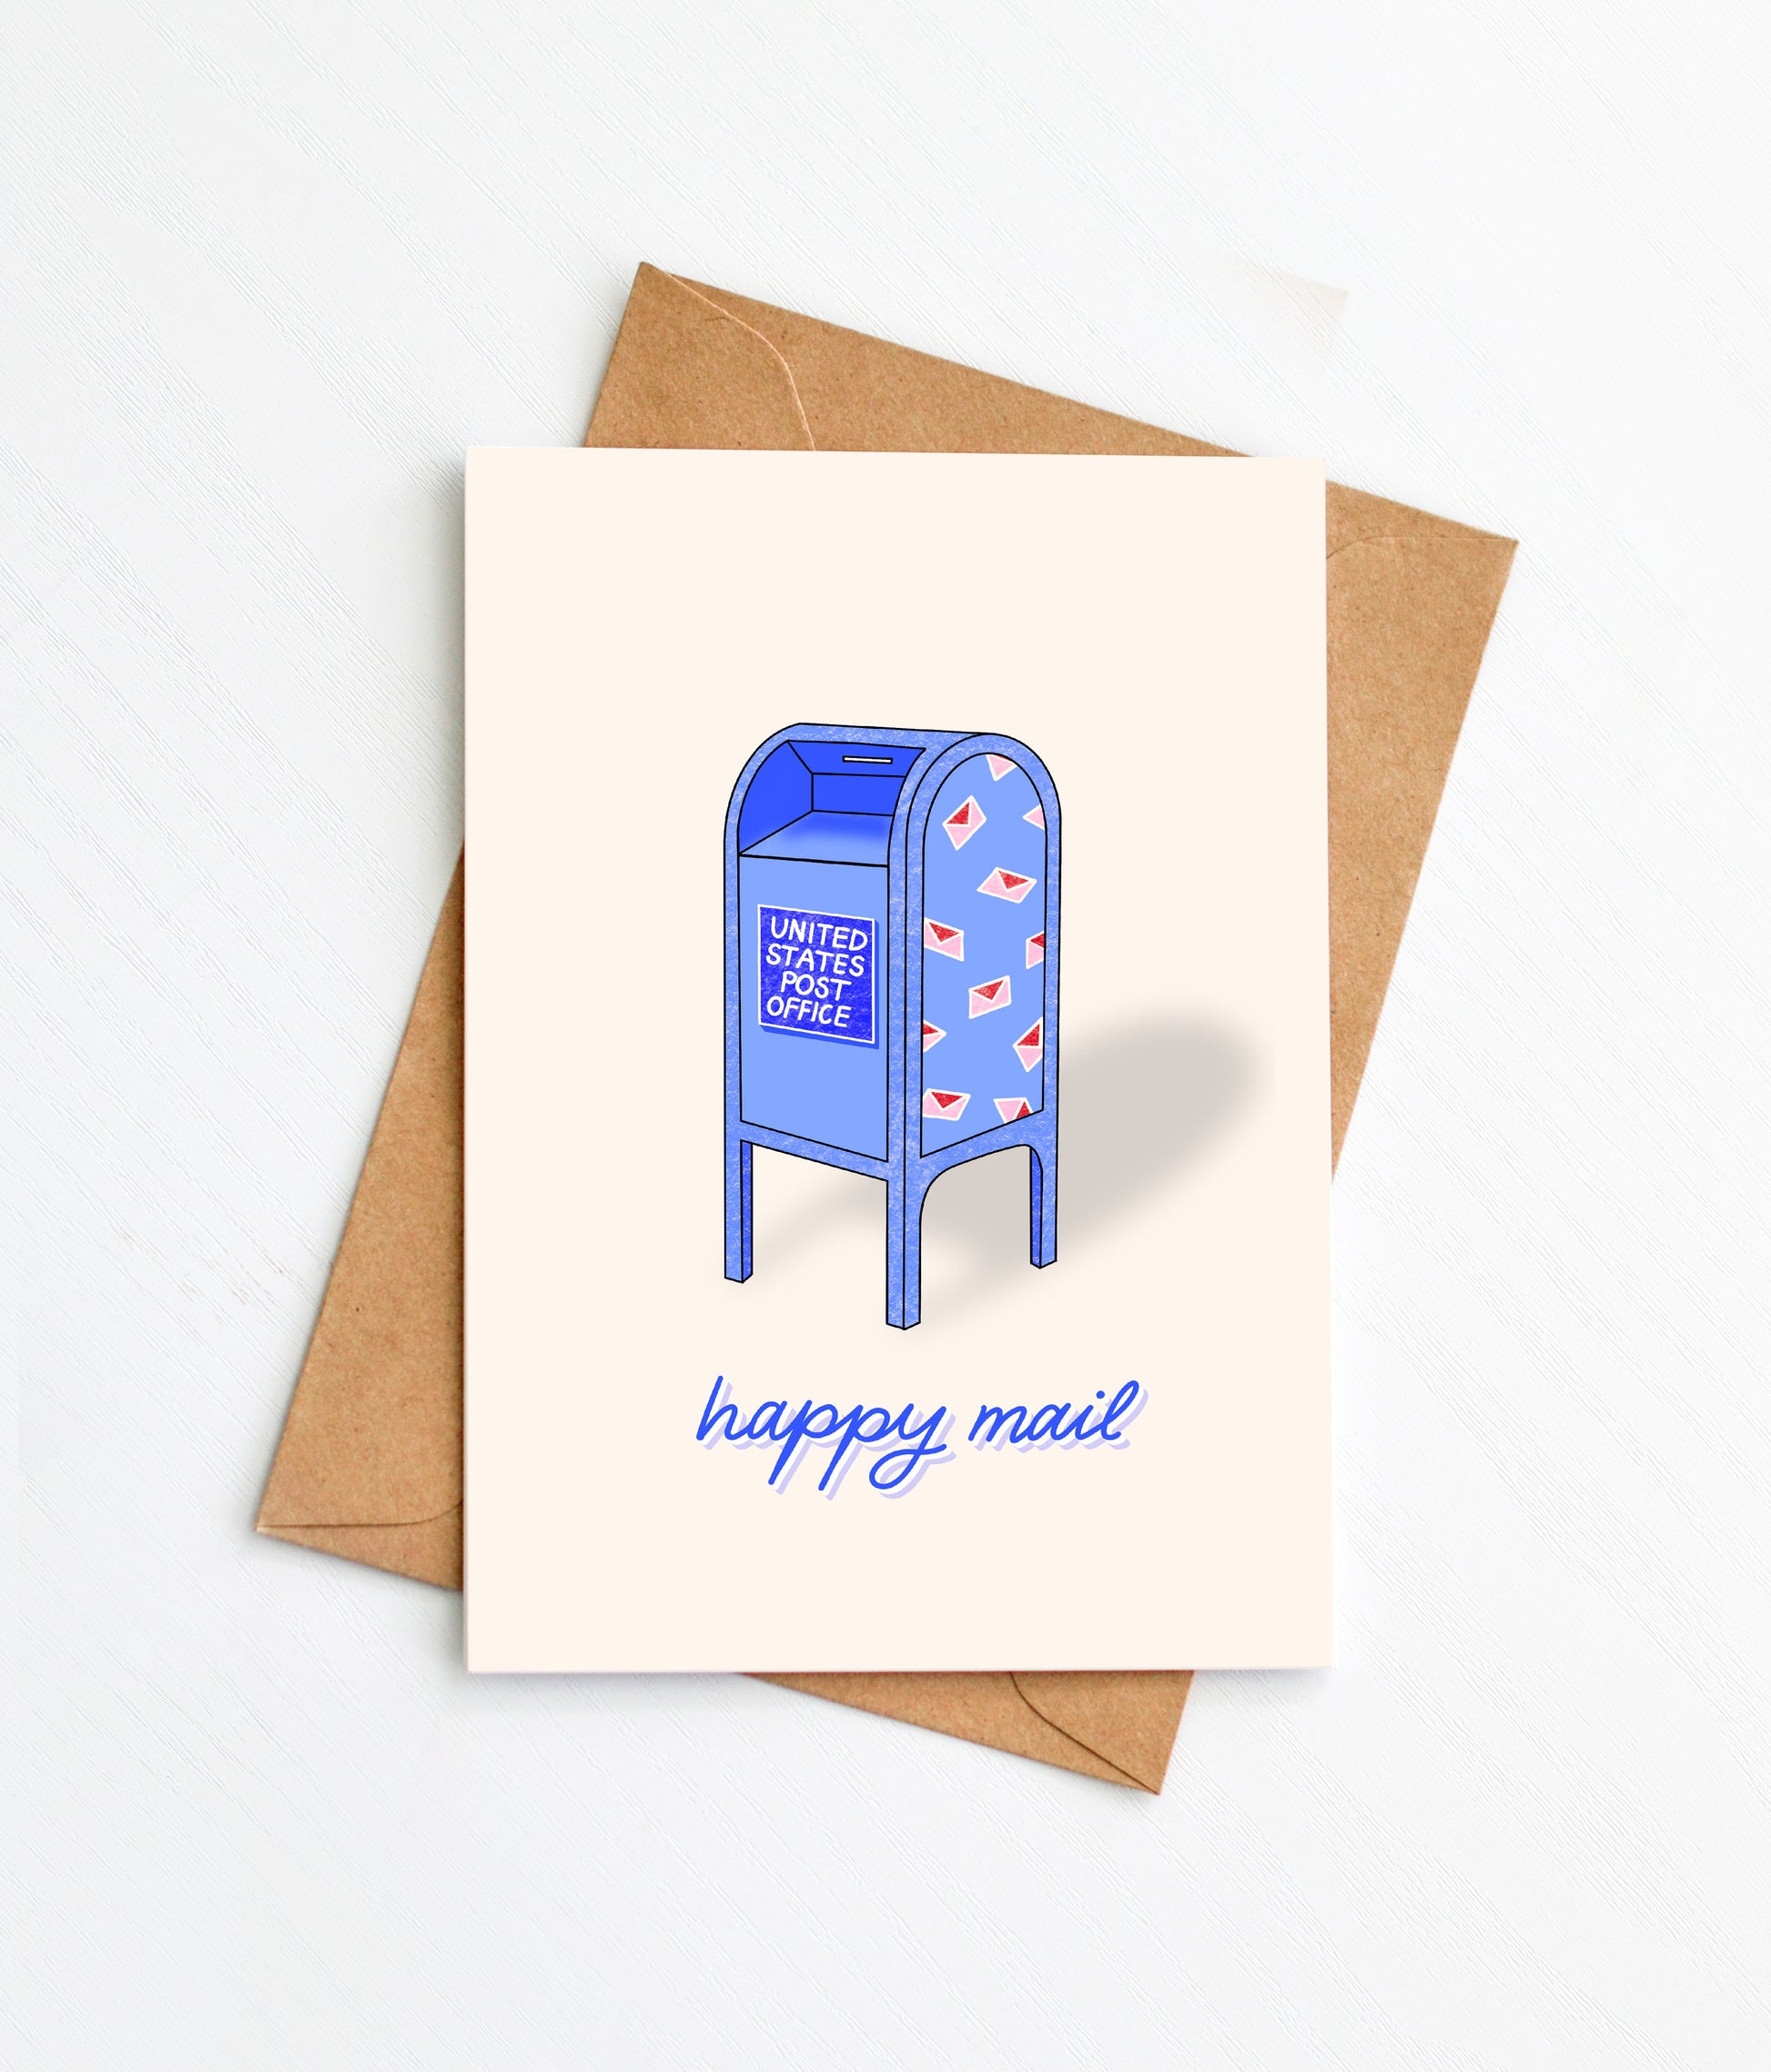 Happy Mail Sunshine Envelope Stickers